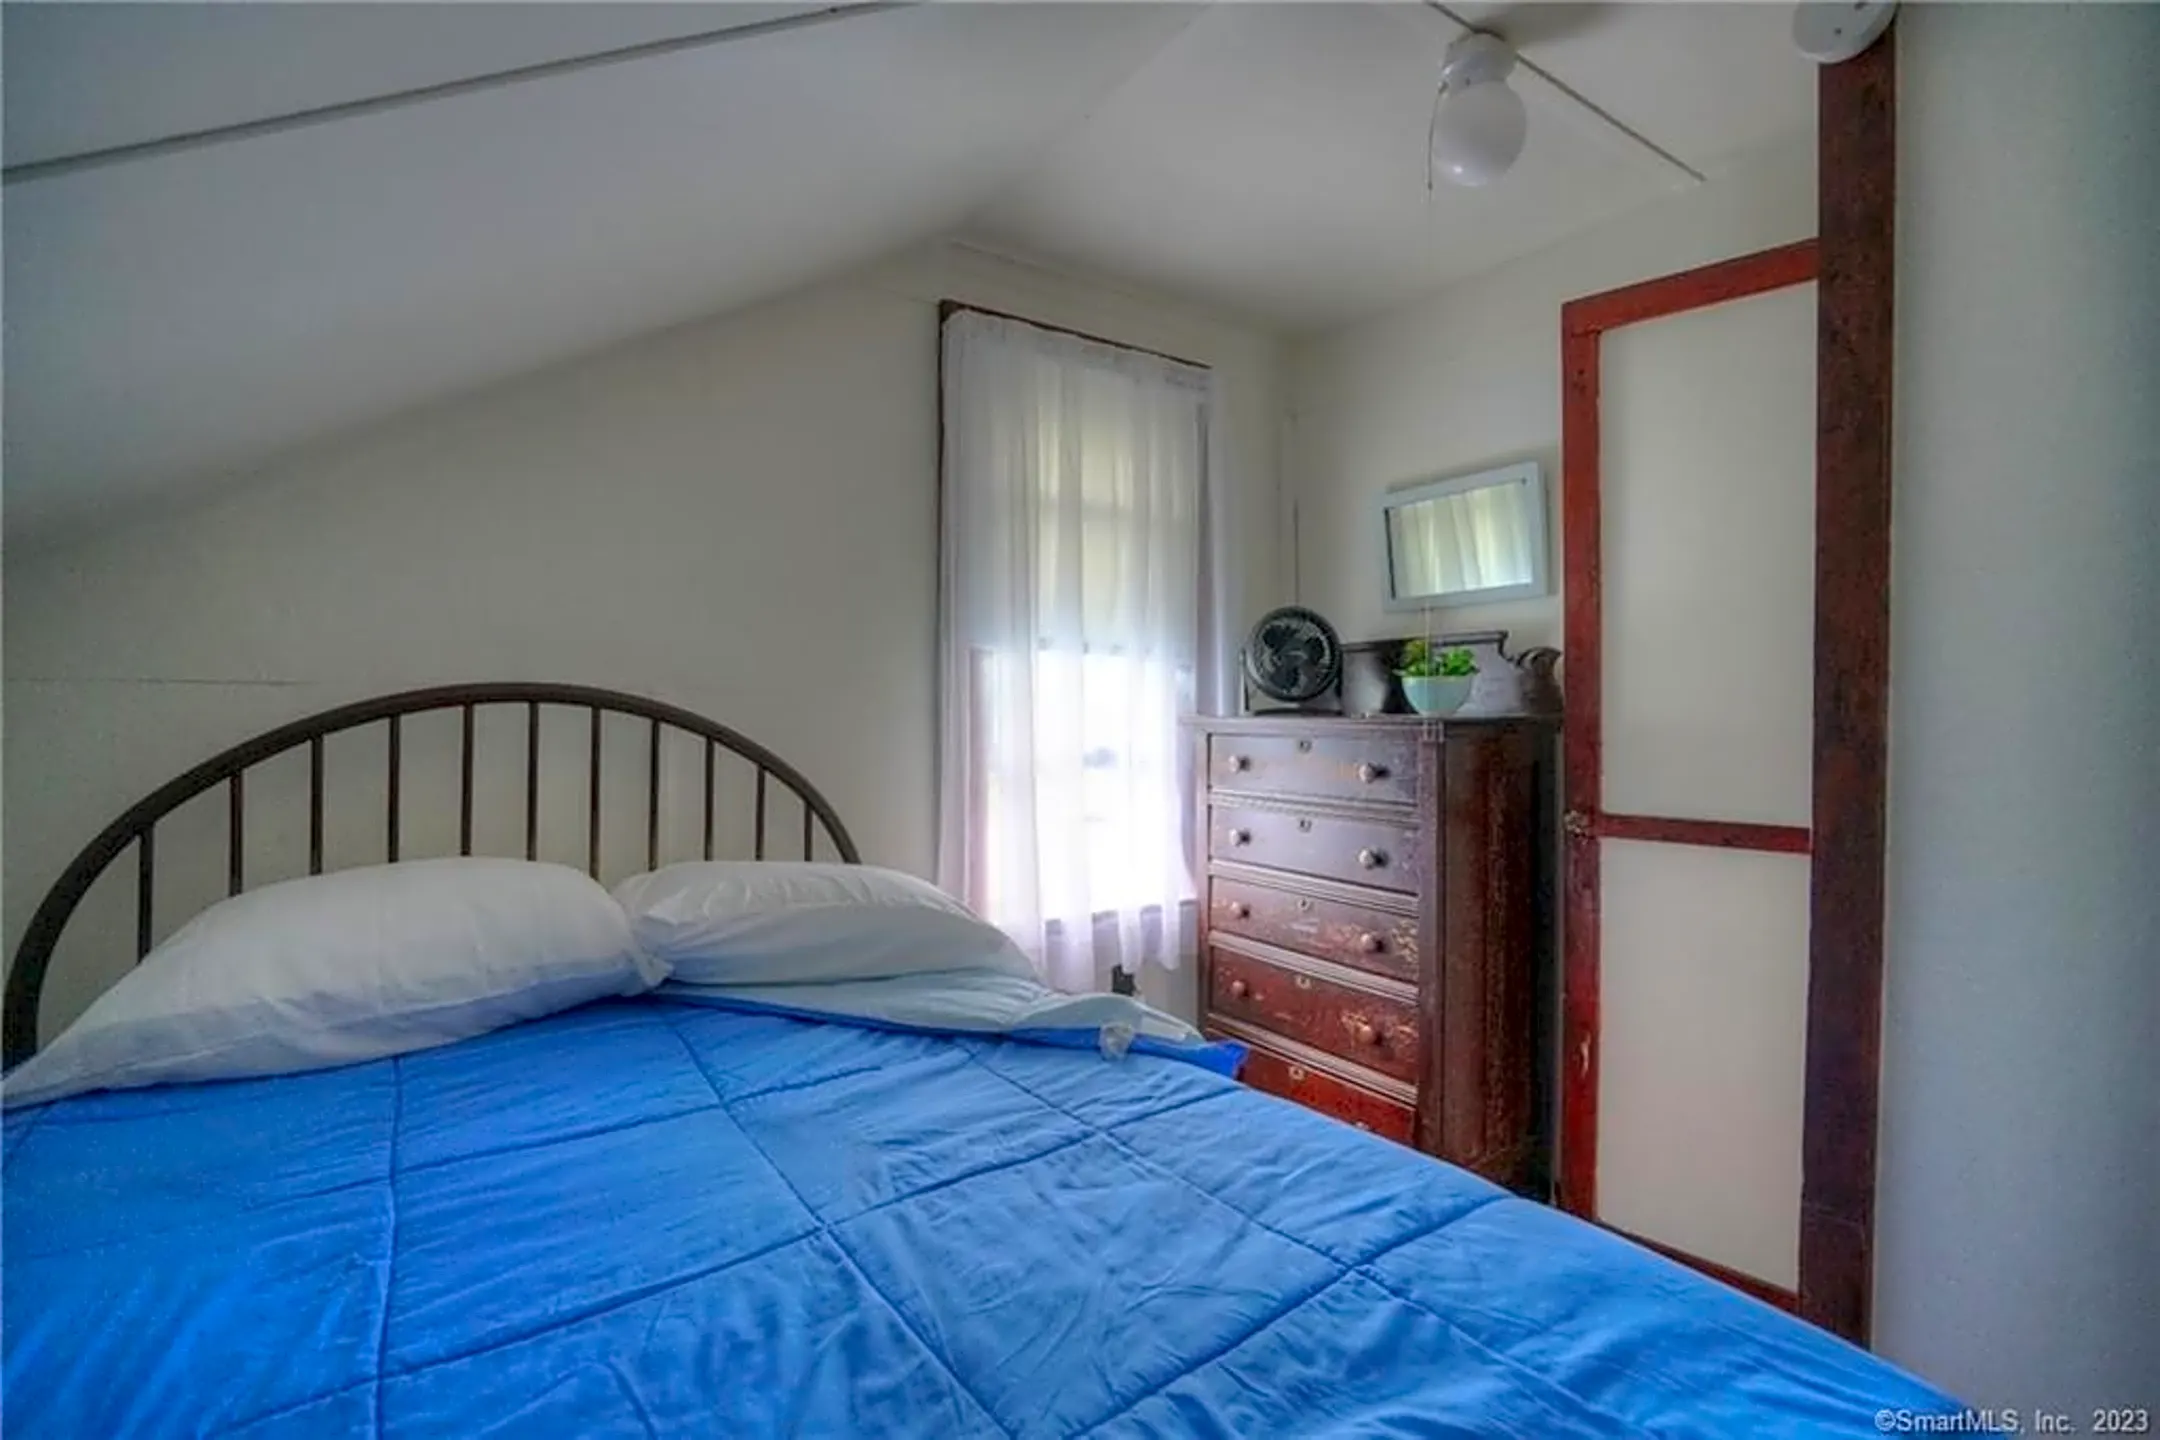 Bedroom - 80 Noyes Ave - Stonington, CT